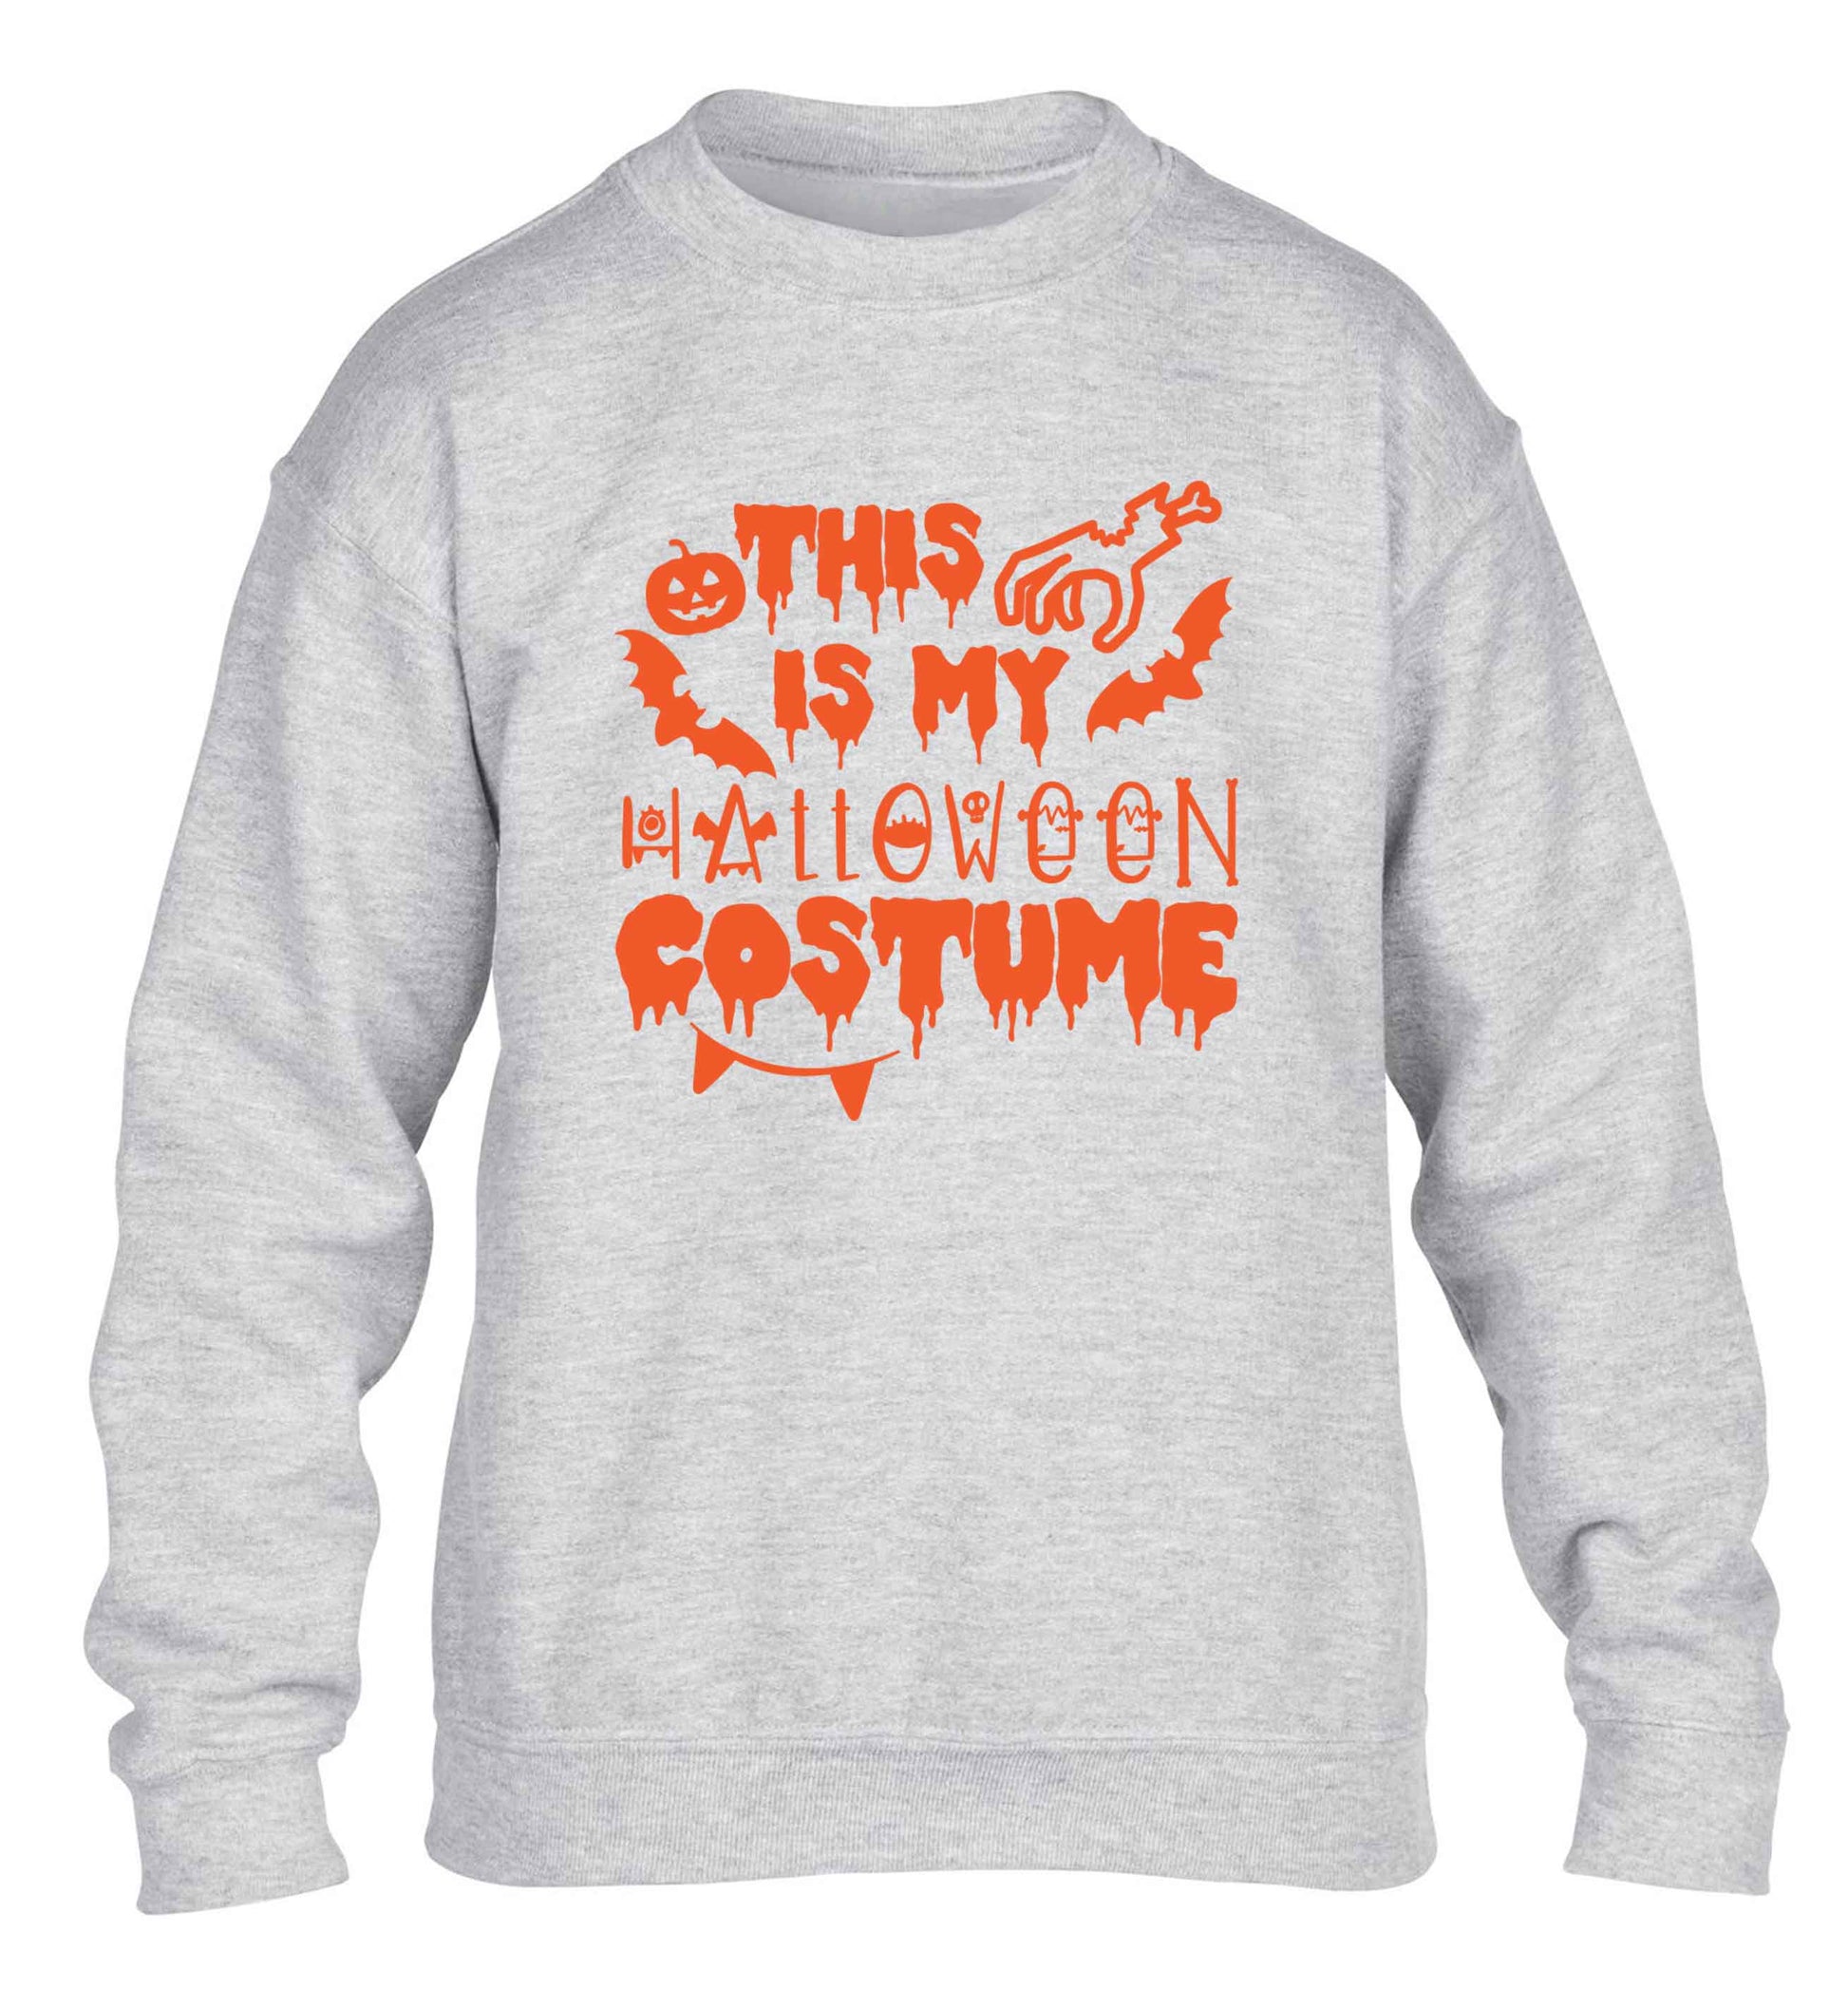 This is my halloween costume children's grey sweater 12-13 Years